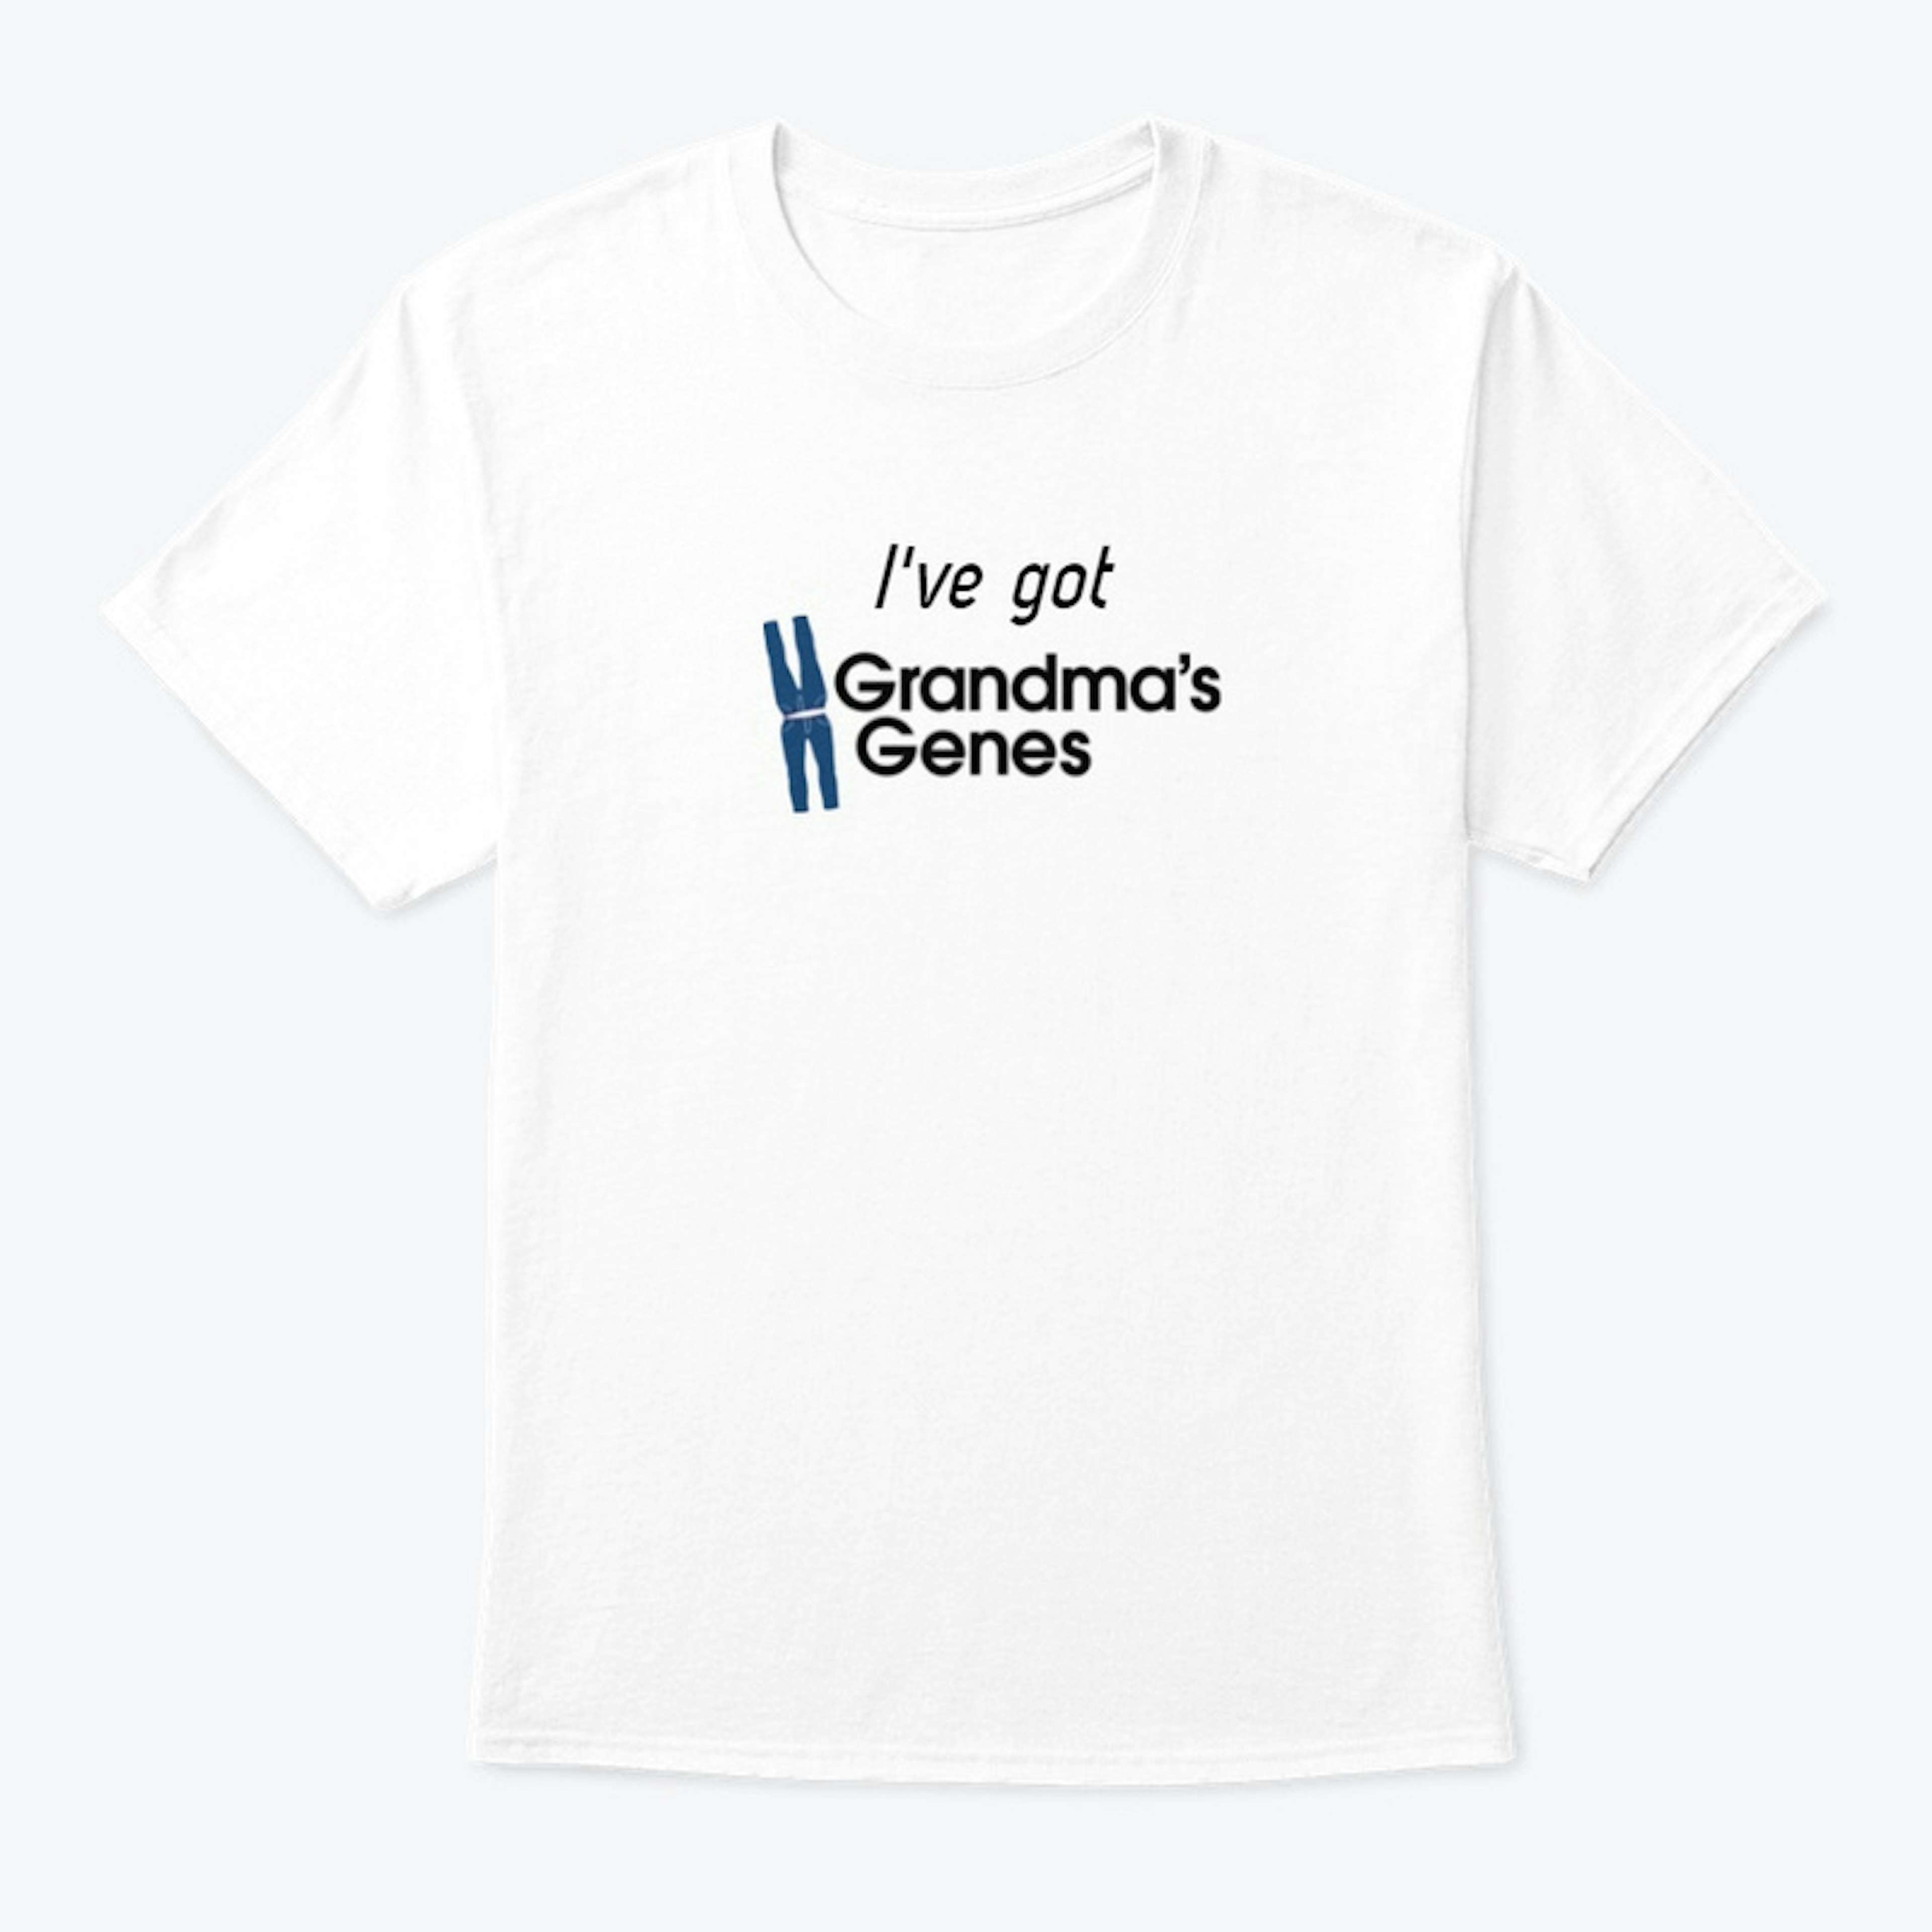 I've got Grandma's Genes